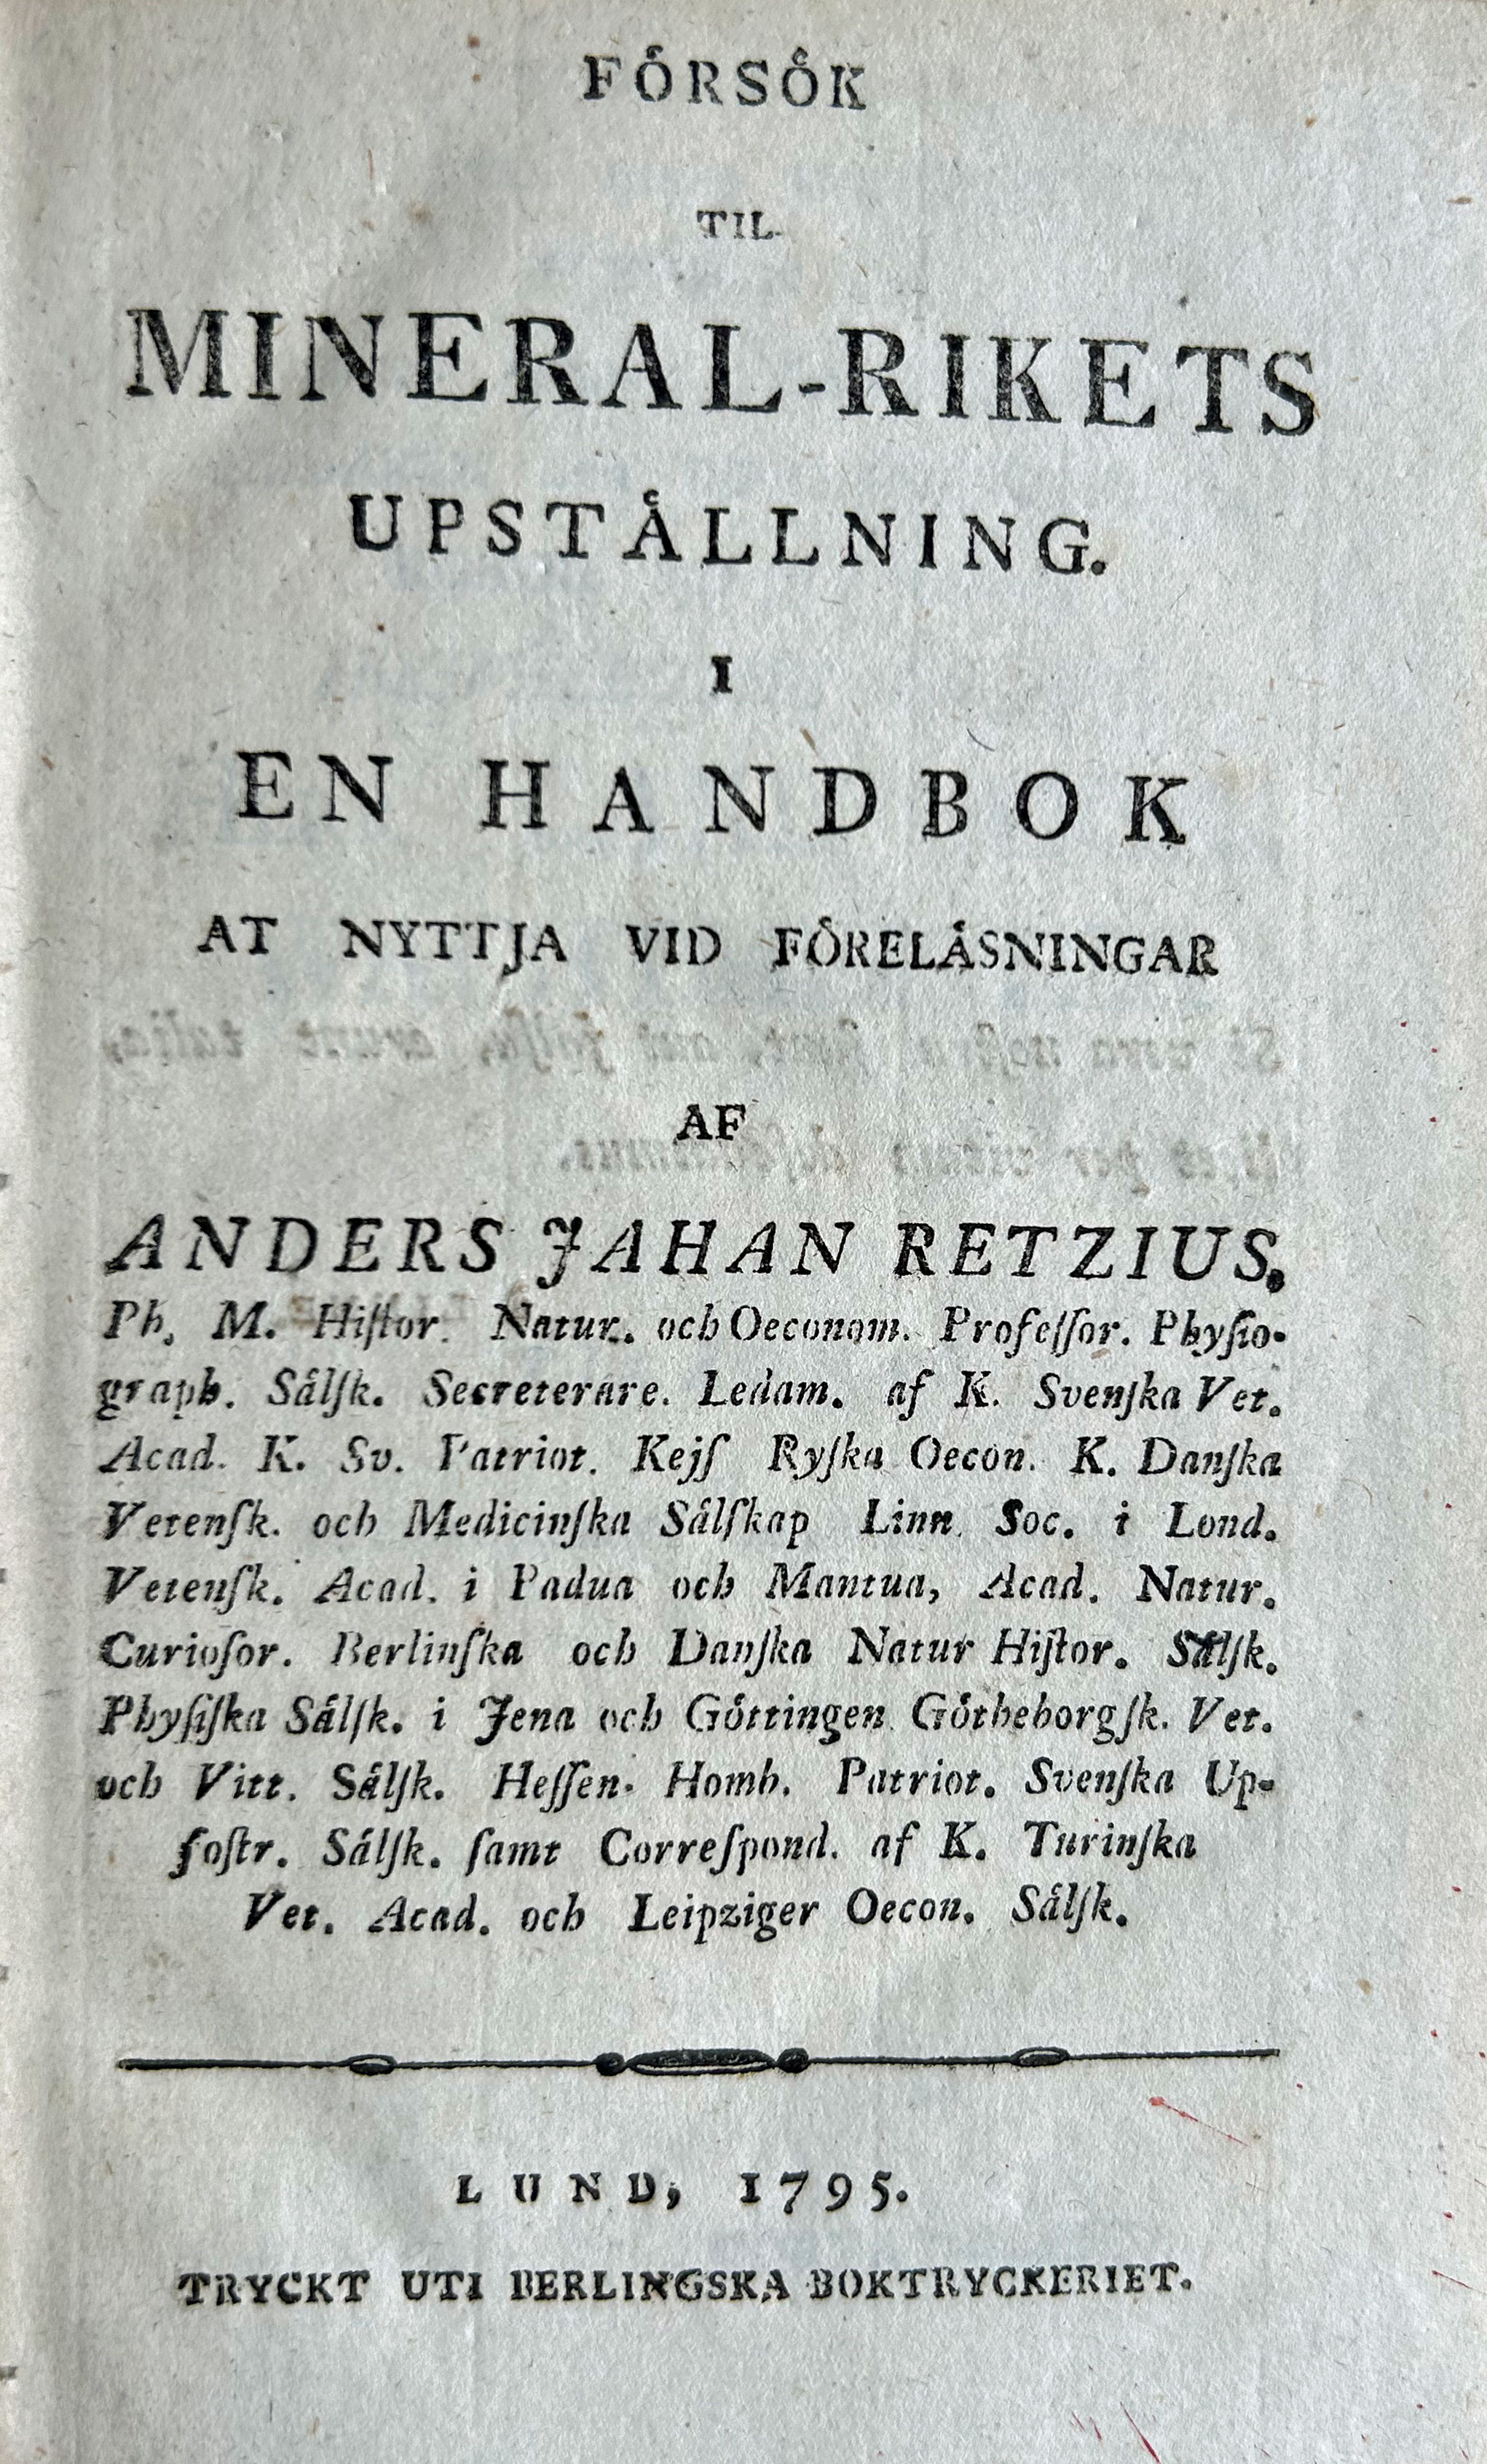 Retzius, Anders Jahan (1795)